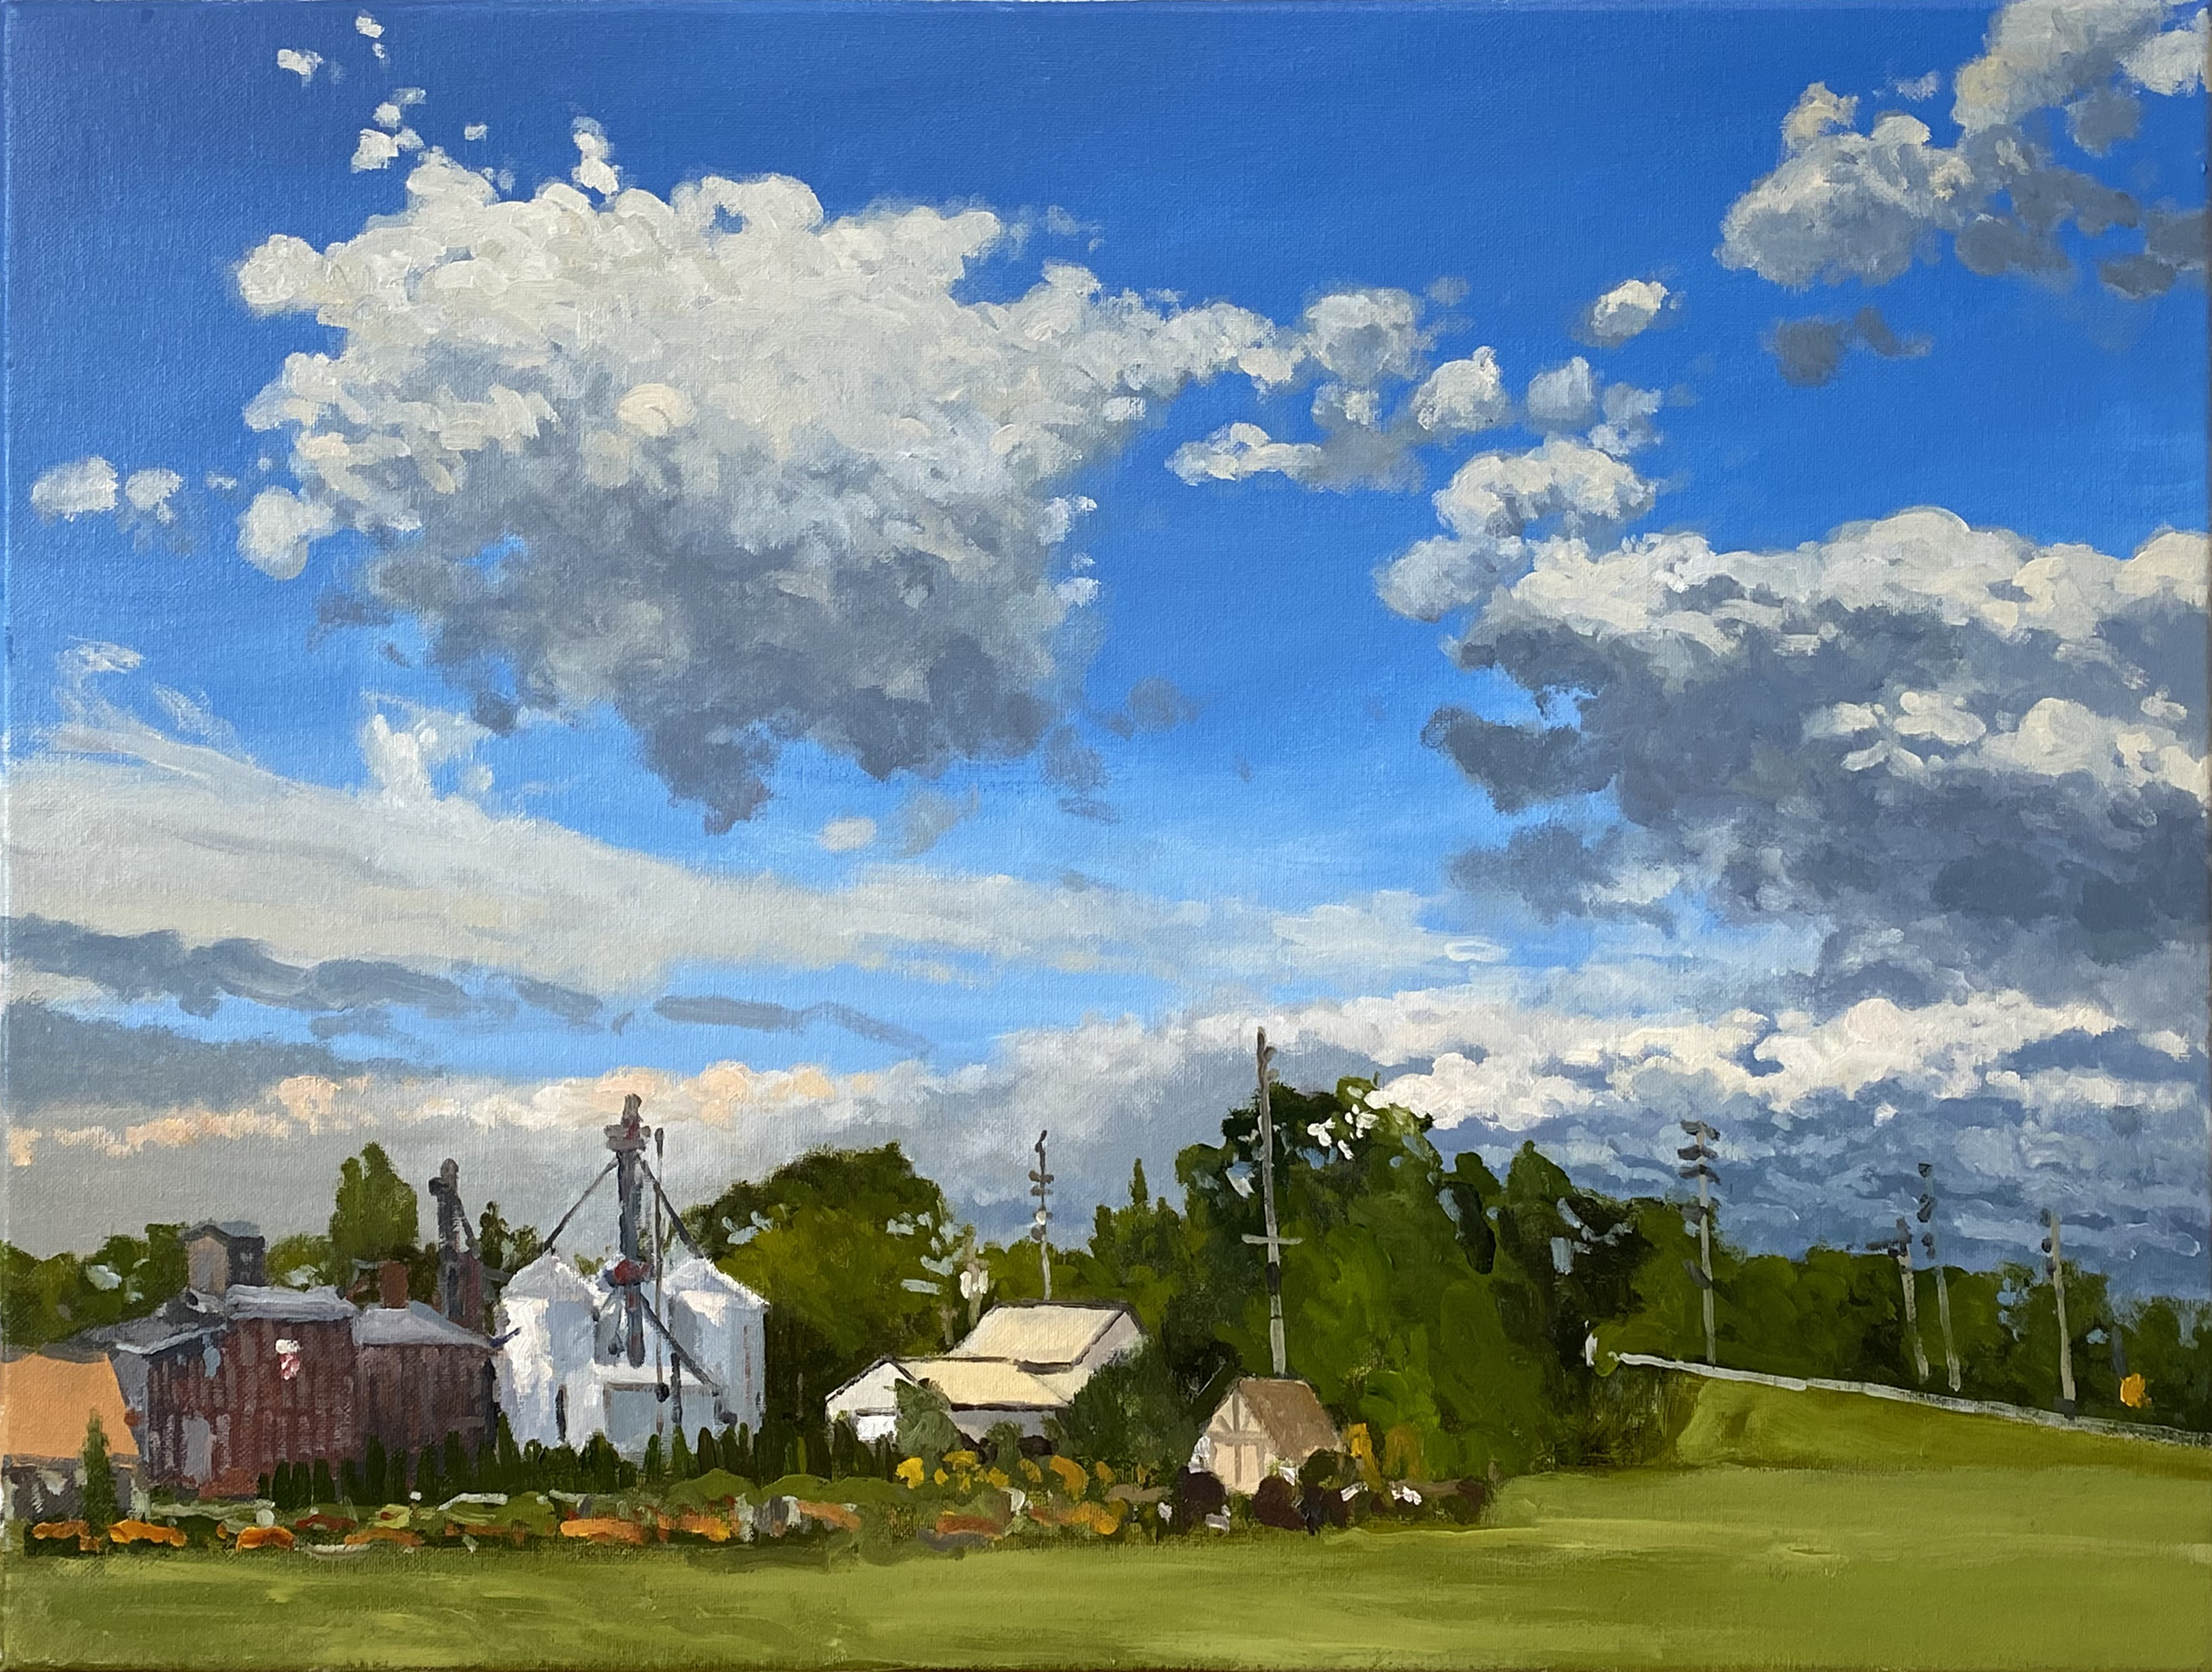 Siefart Supply, Three Oaks, MI plein air, oil on canvas, 18 x 24 inche